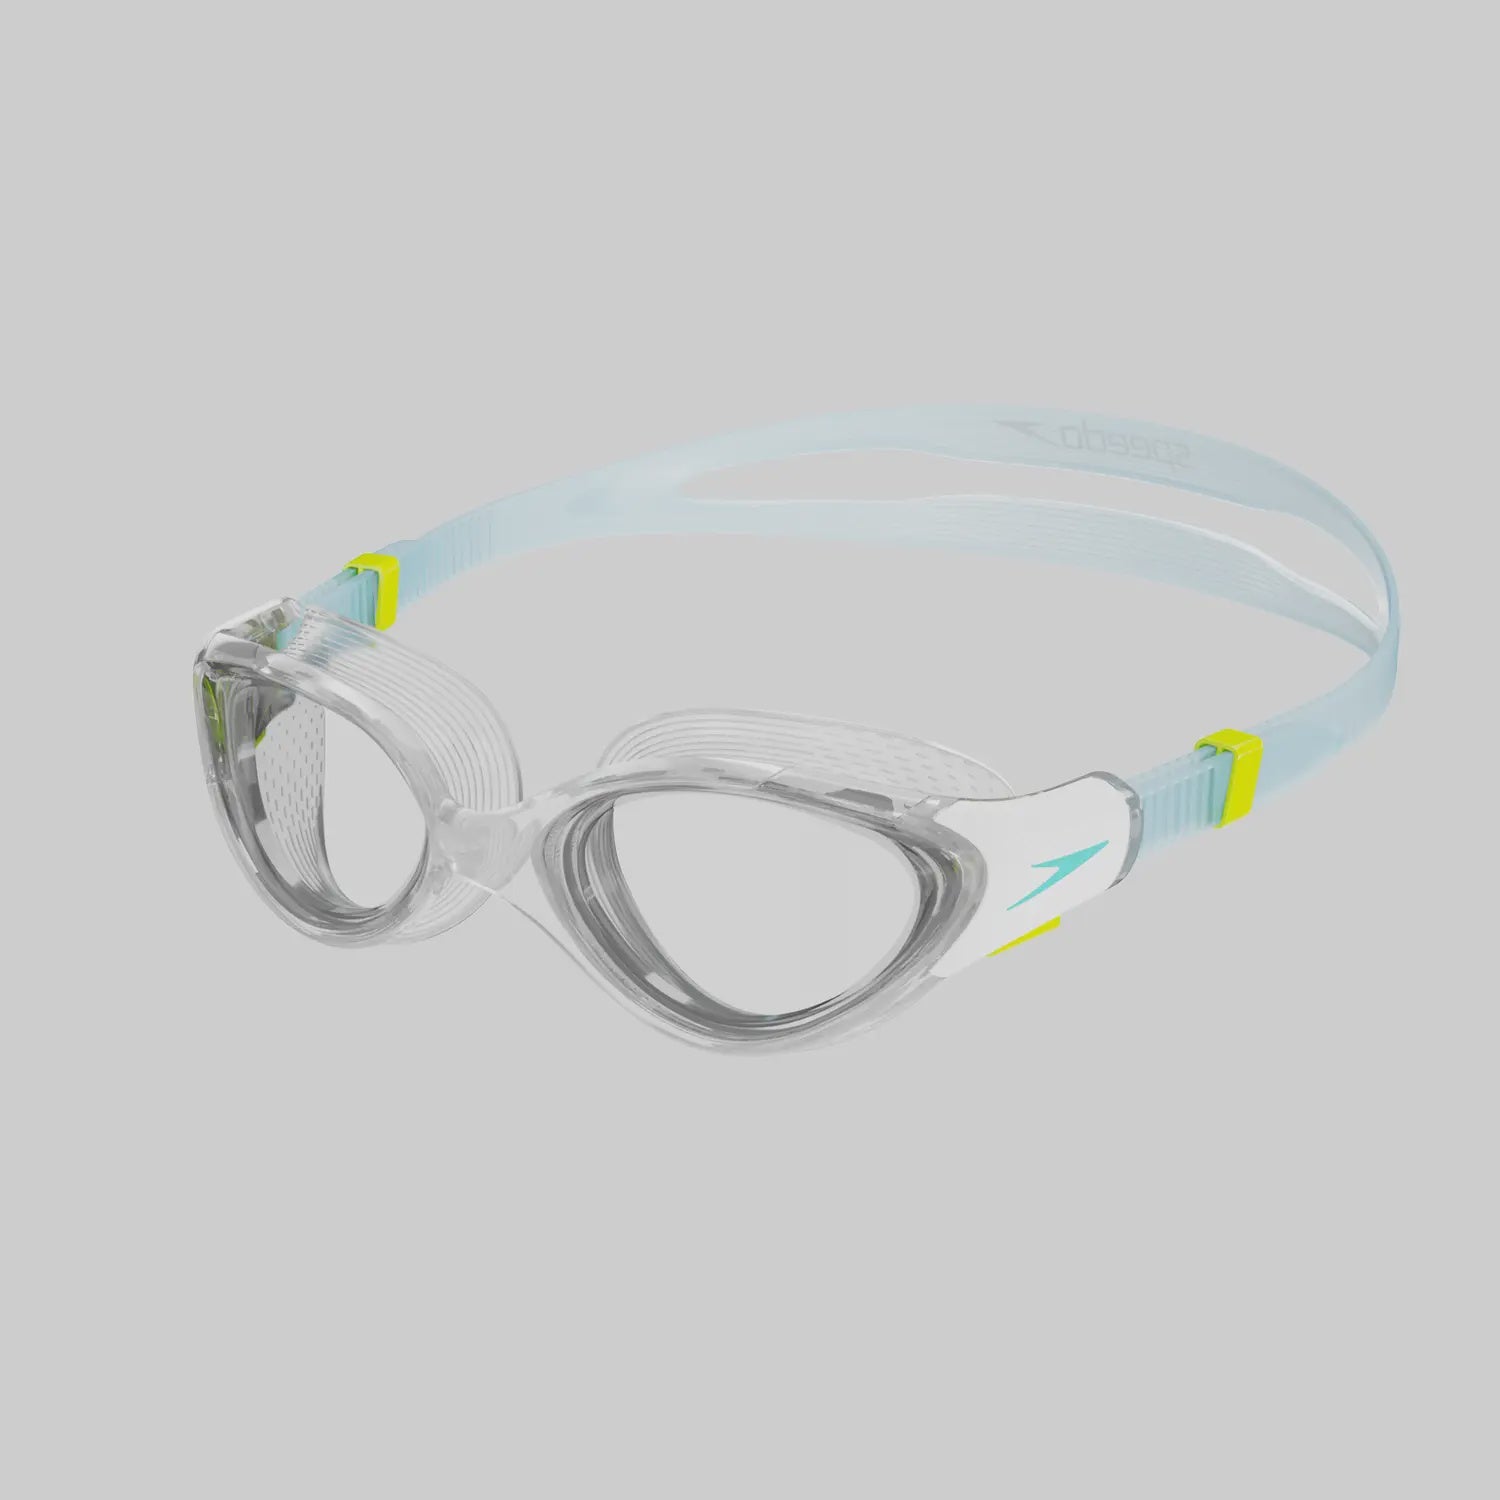 Speedo Futura Biofuse Flexiseal 2.0 Women's Goggles - Clear/Blue